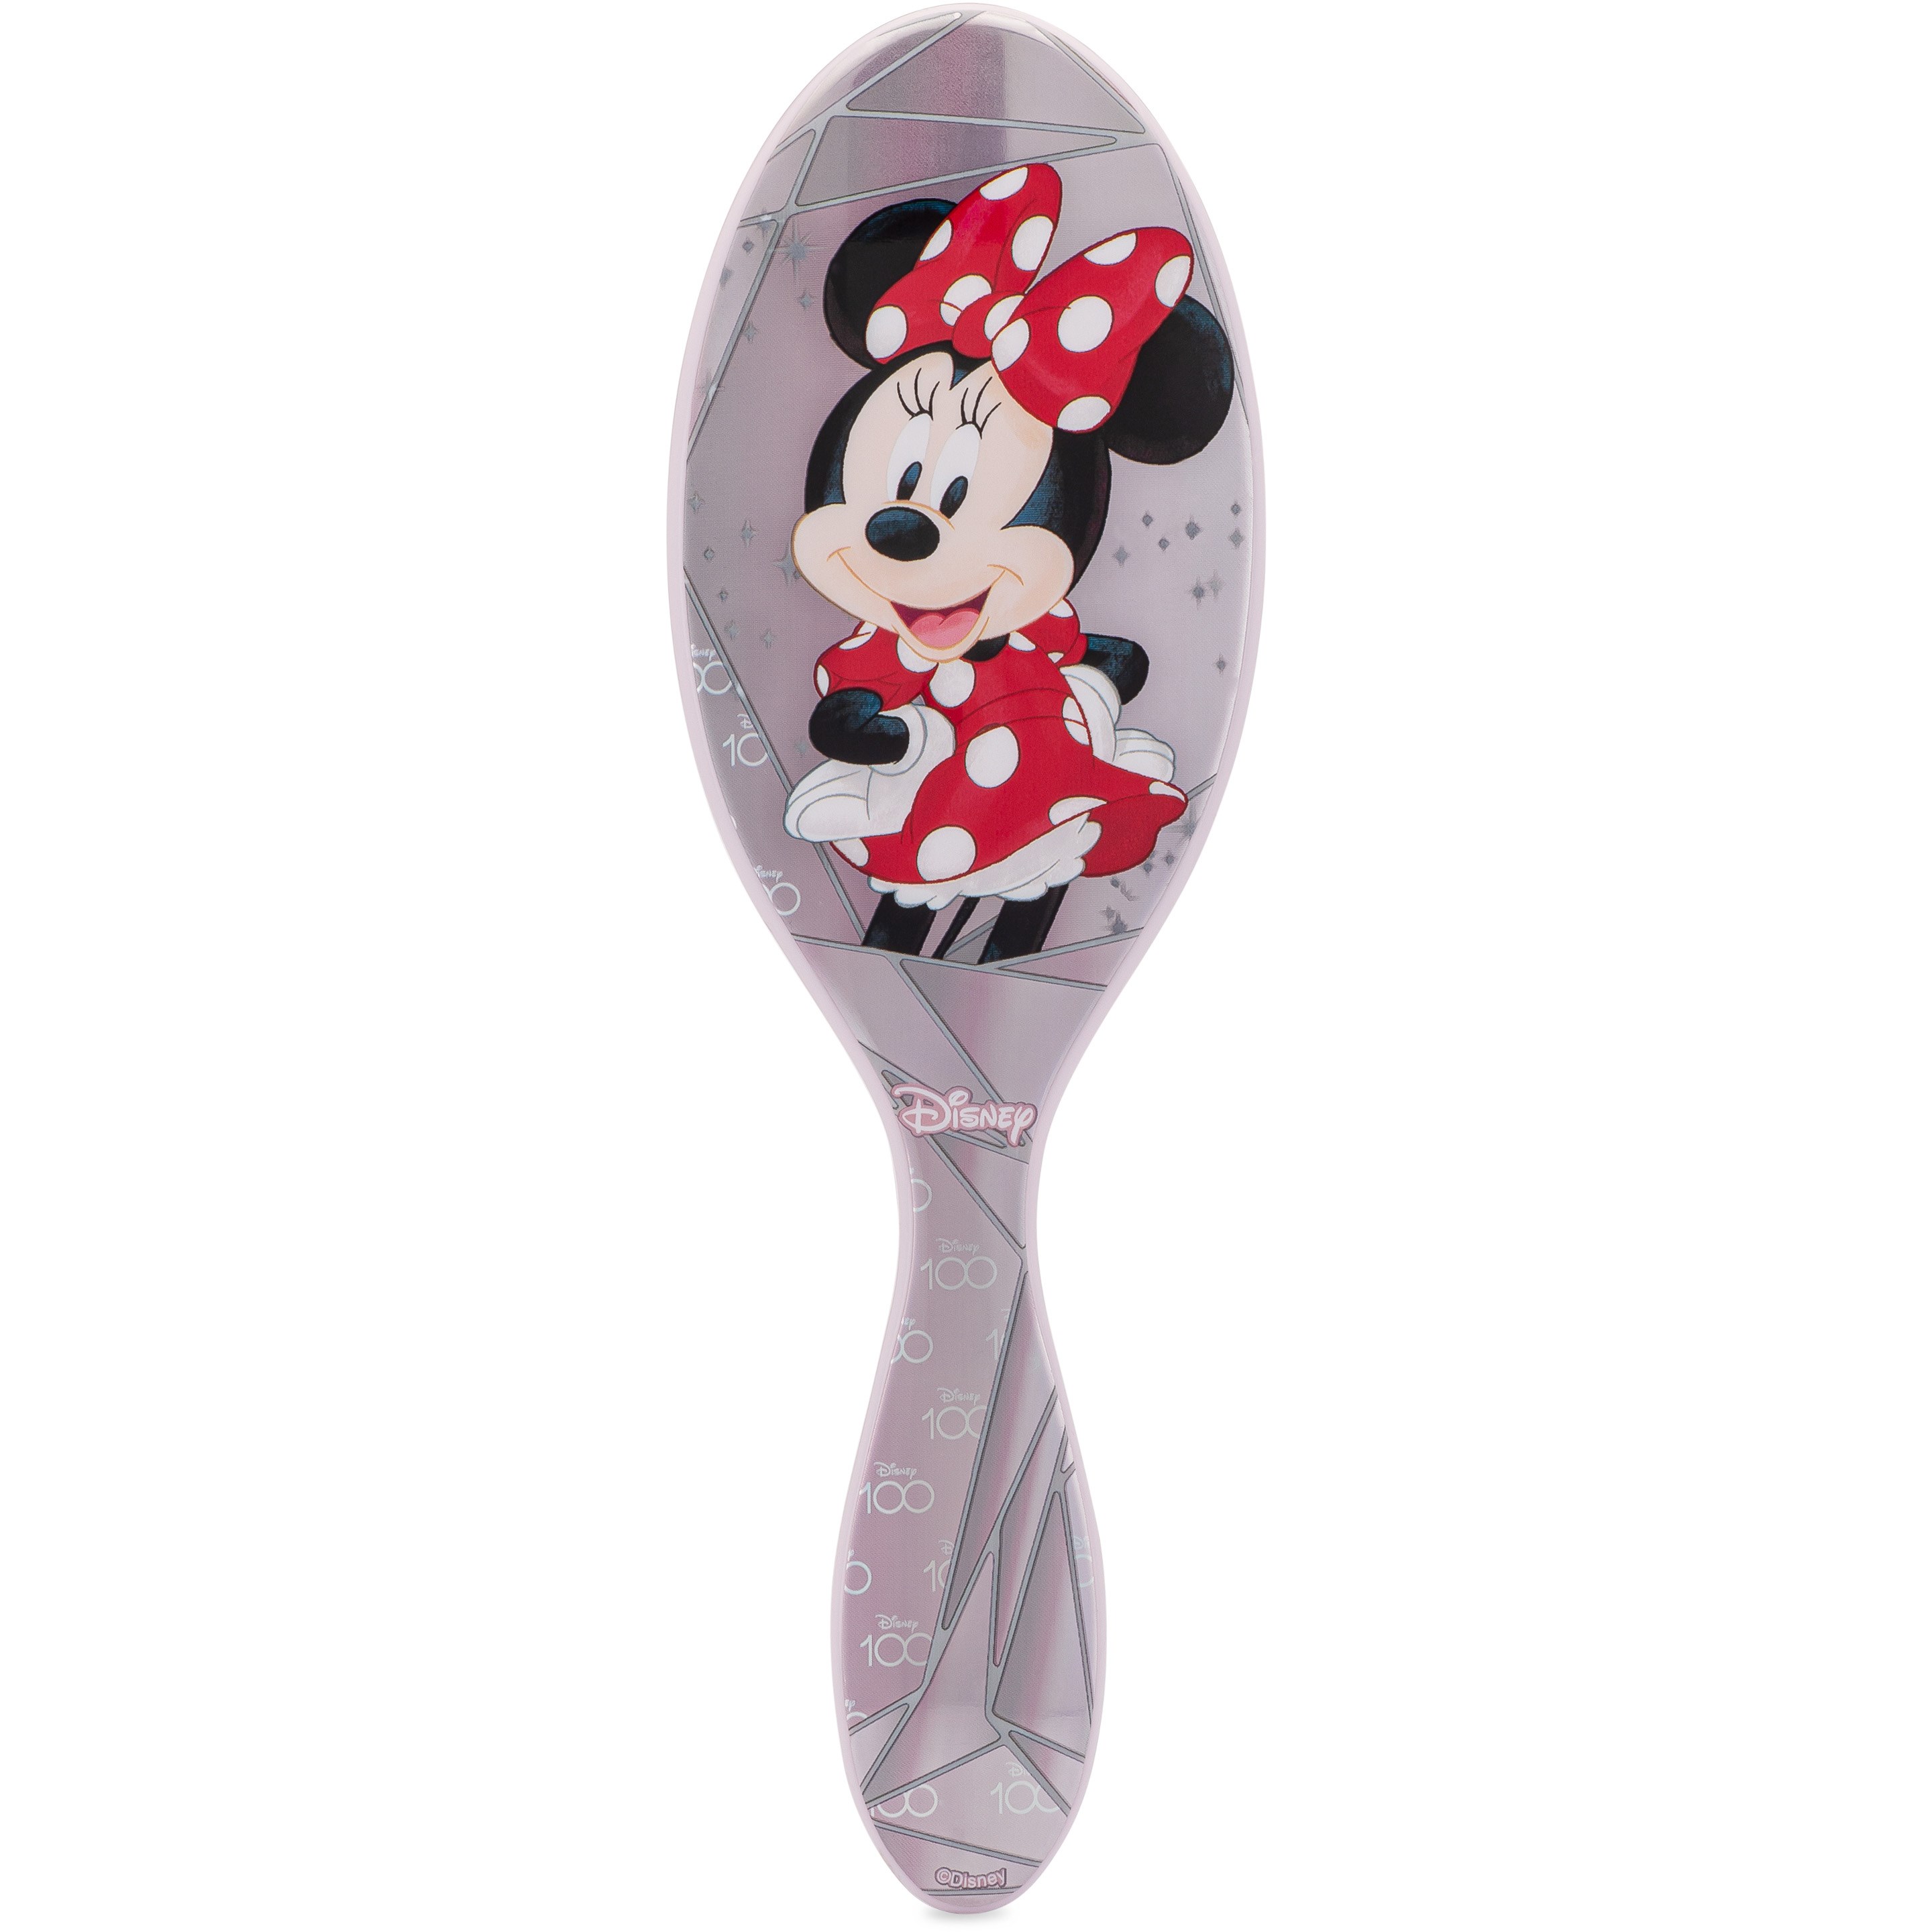 WetBrush Original Detangler Disney Minnie Mouse